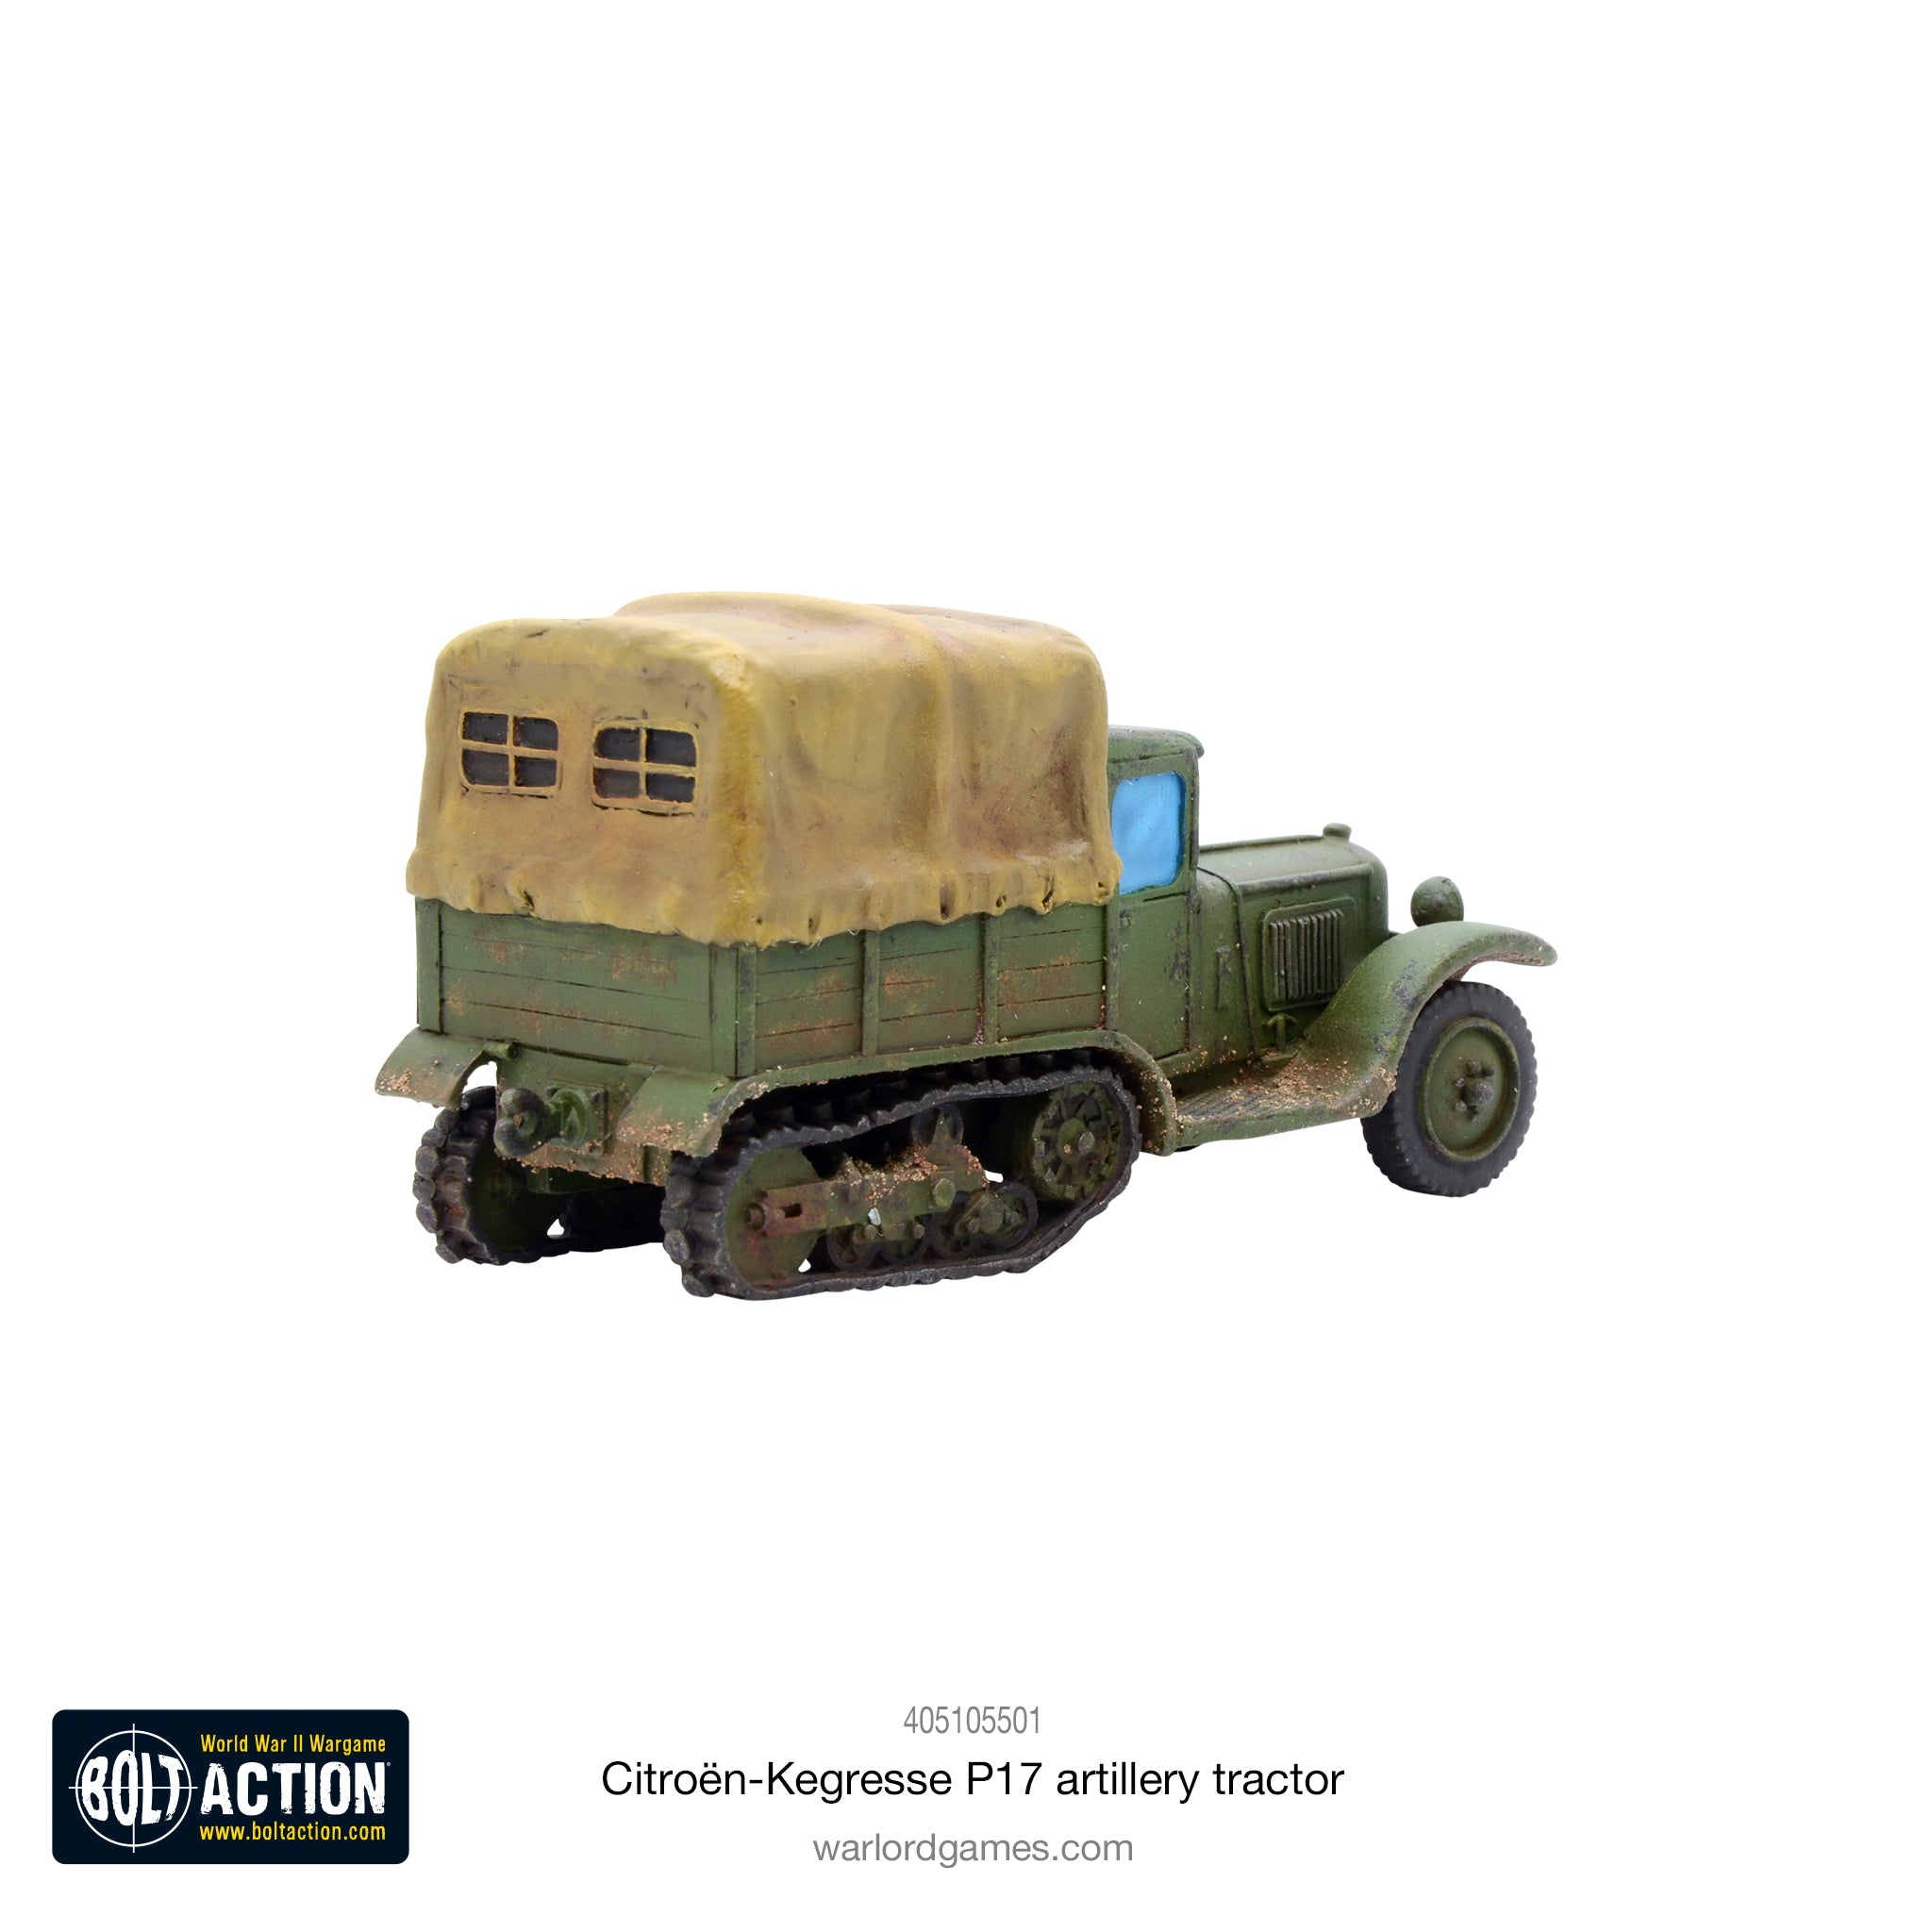 Citroën Kegresse P17 artillery tractor